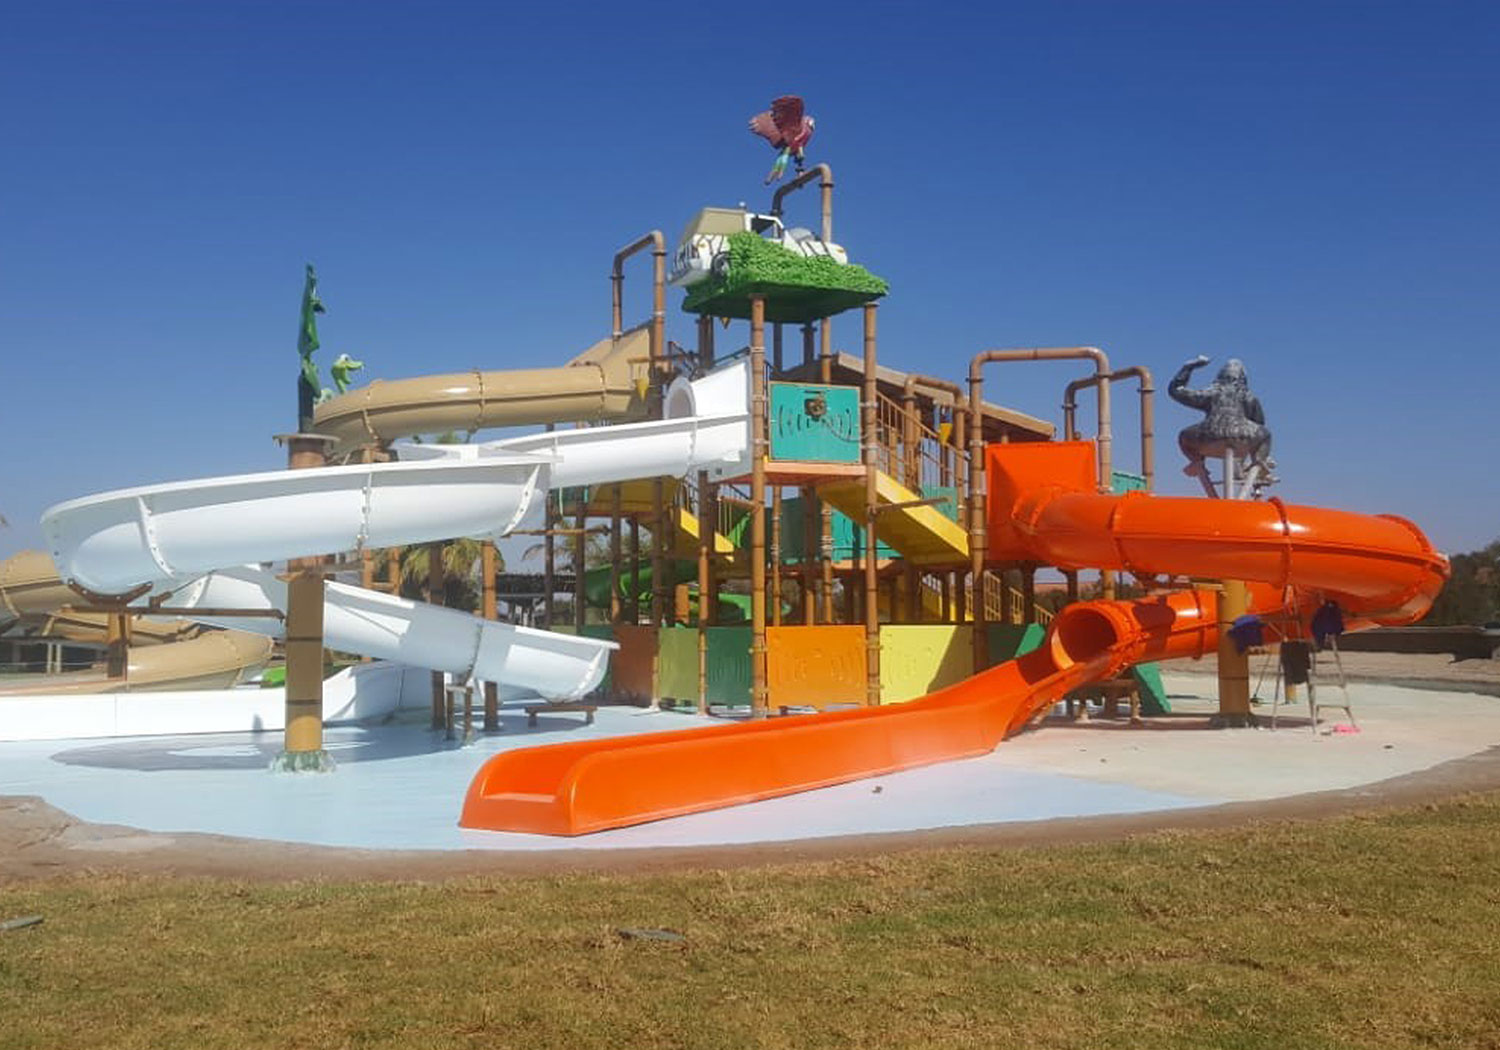 The Kingdom Resort - Splash Kingdom Water Park under going renovations